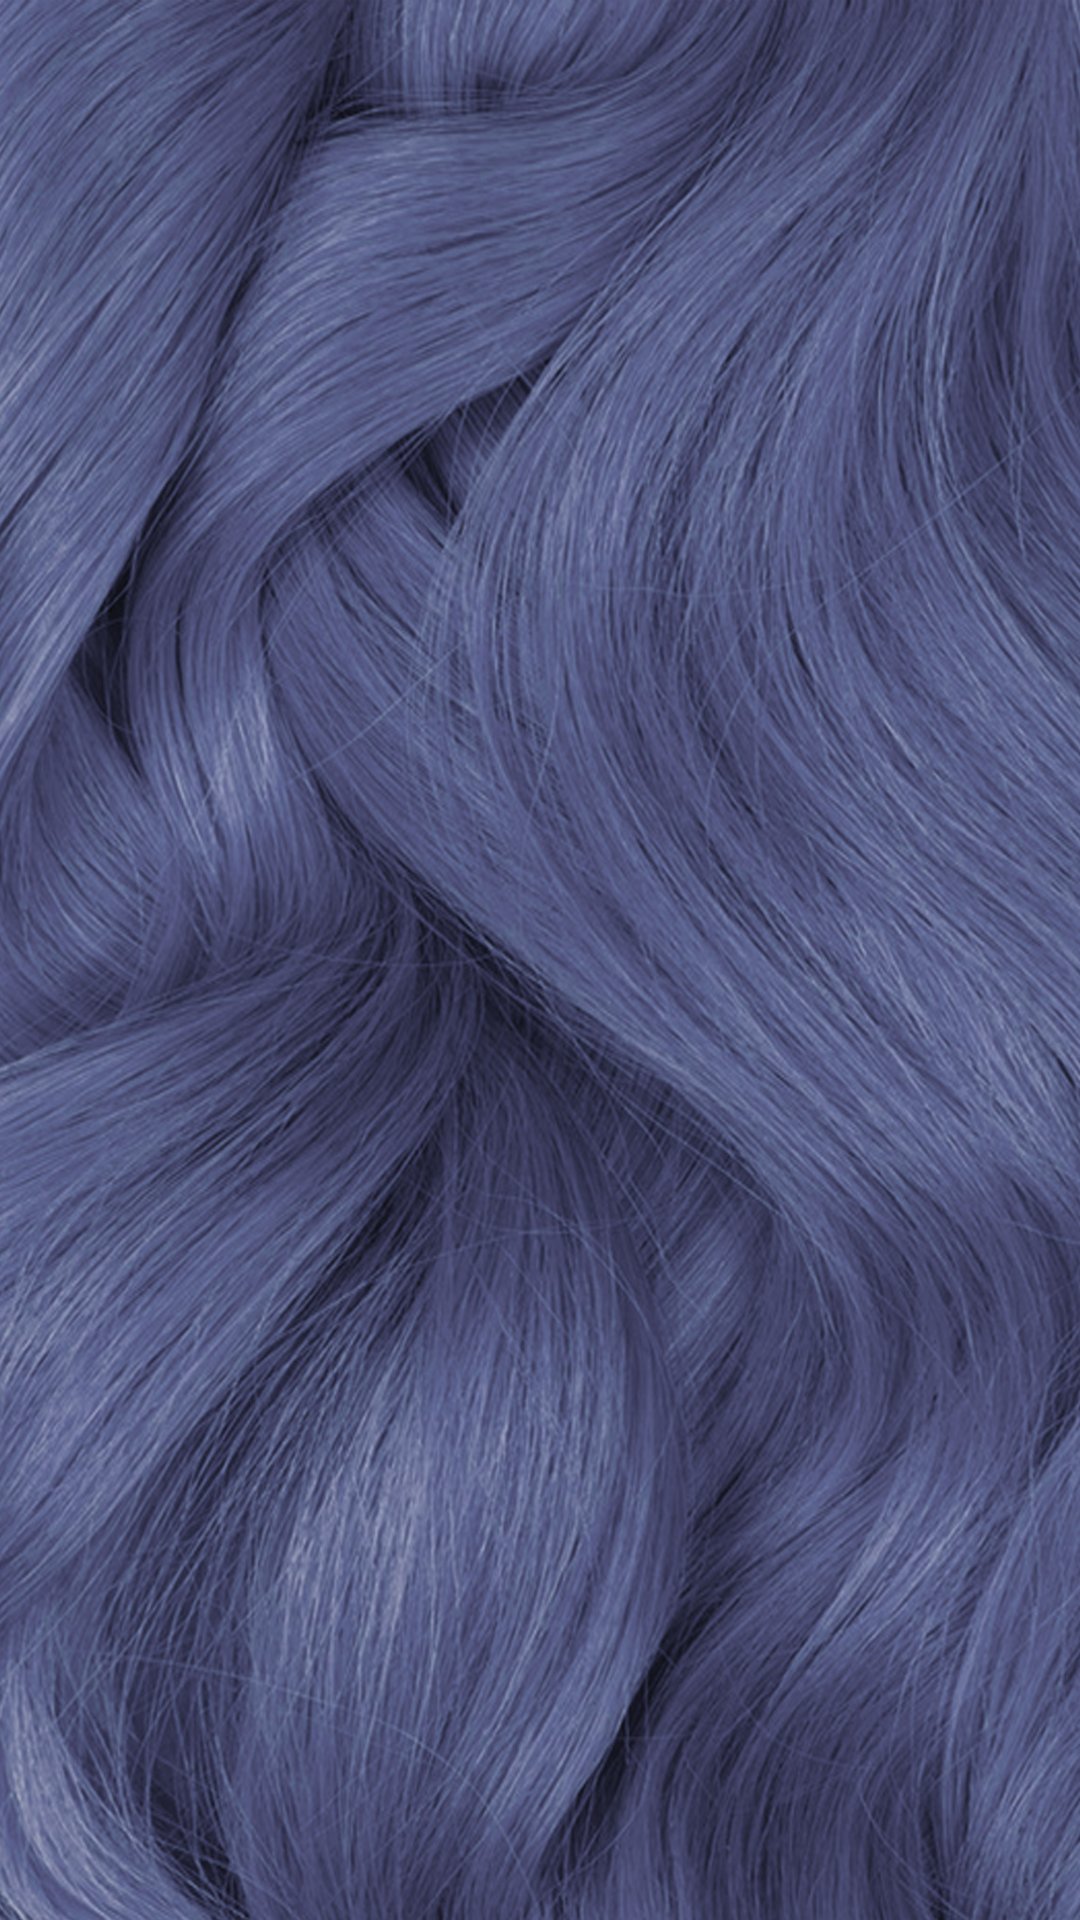 RAVEN MIDNIGHT BLUE HAIR COLOR AND CUT TUTORIAL DENIM BLUE HAIR - YouTube